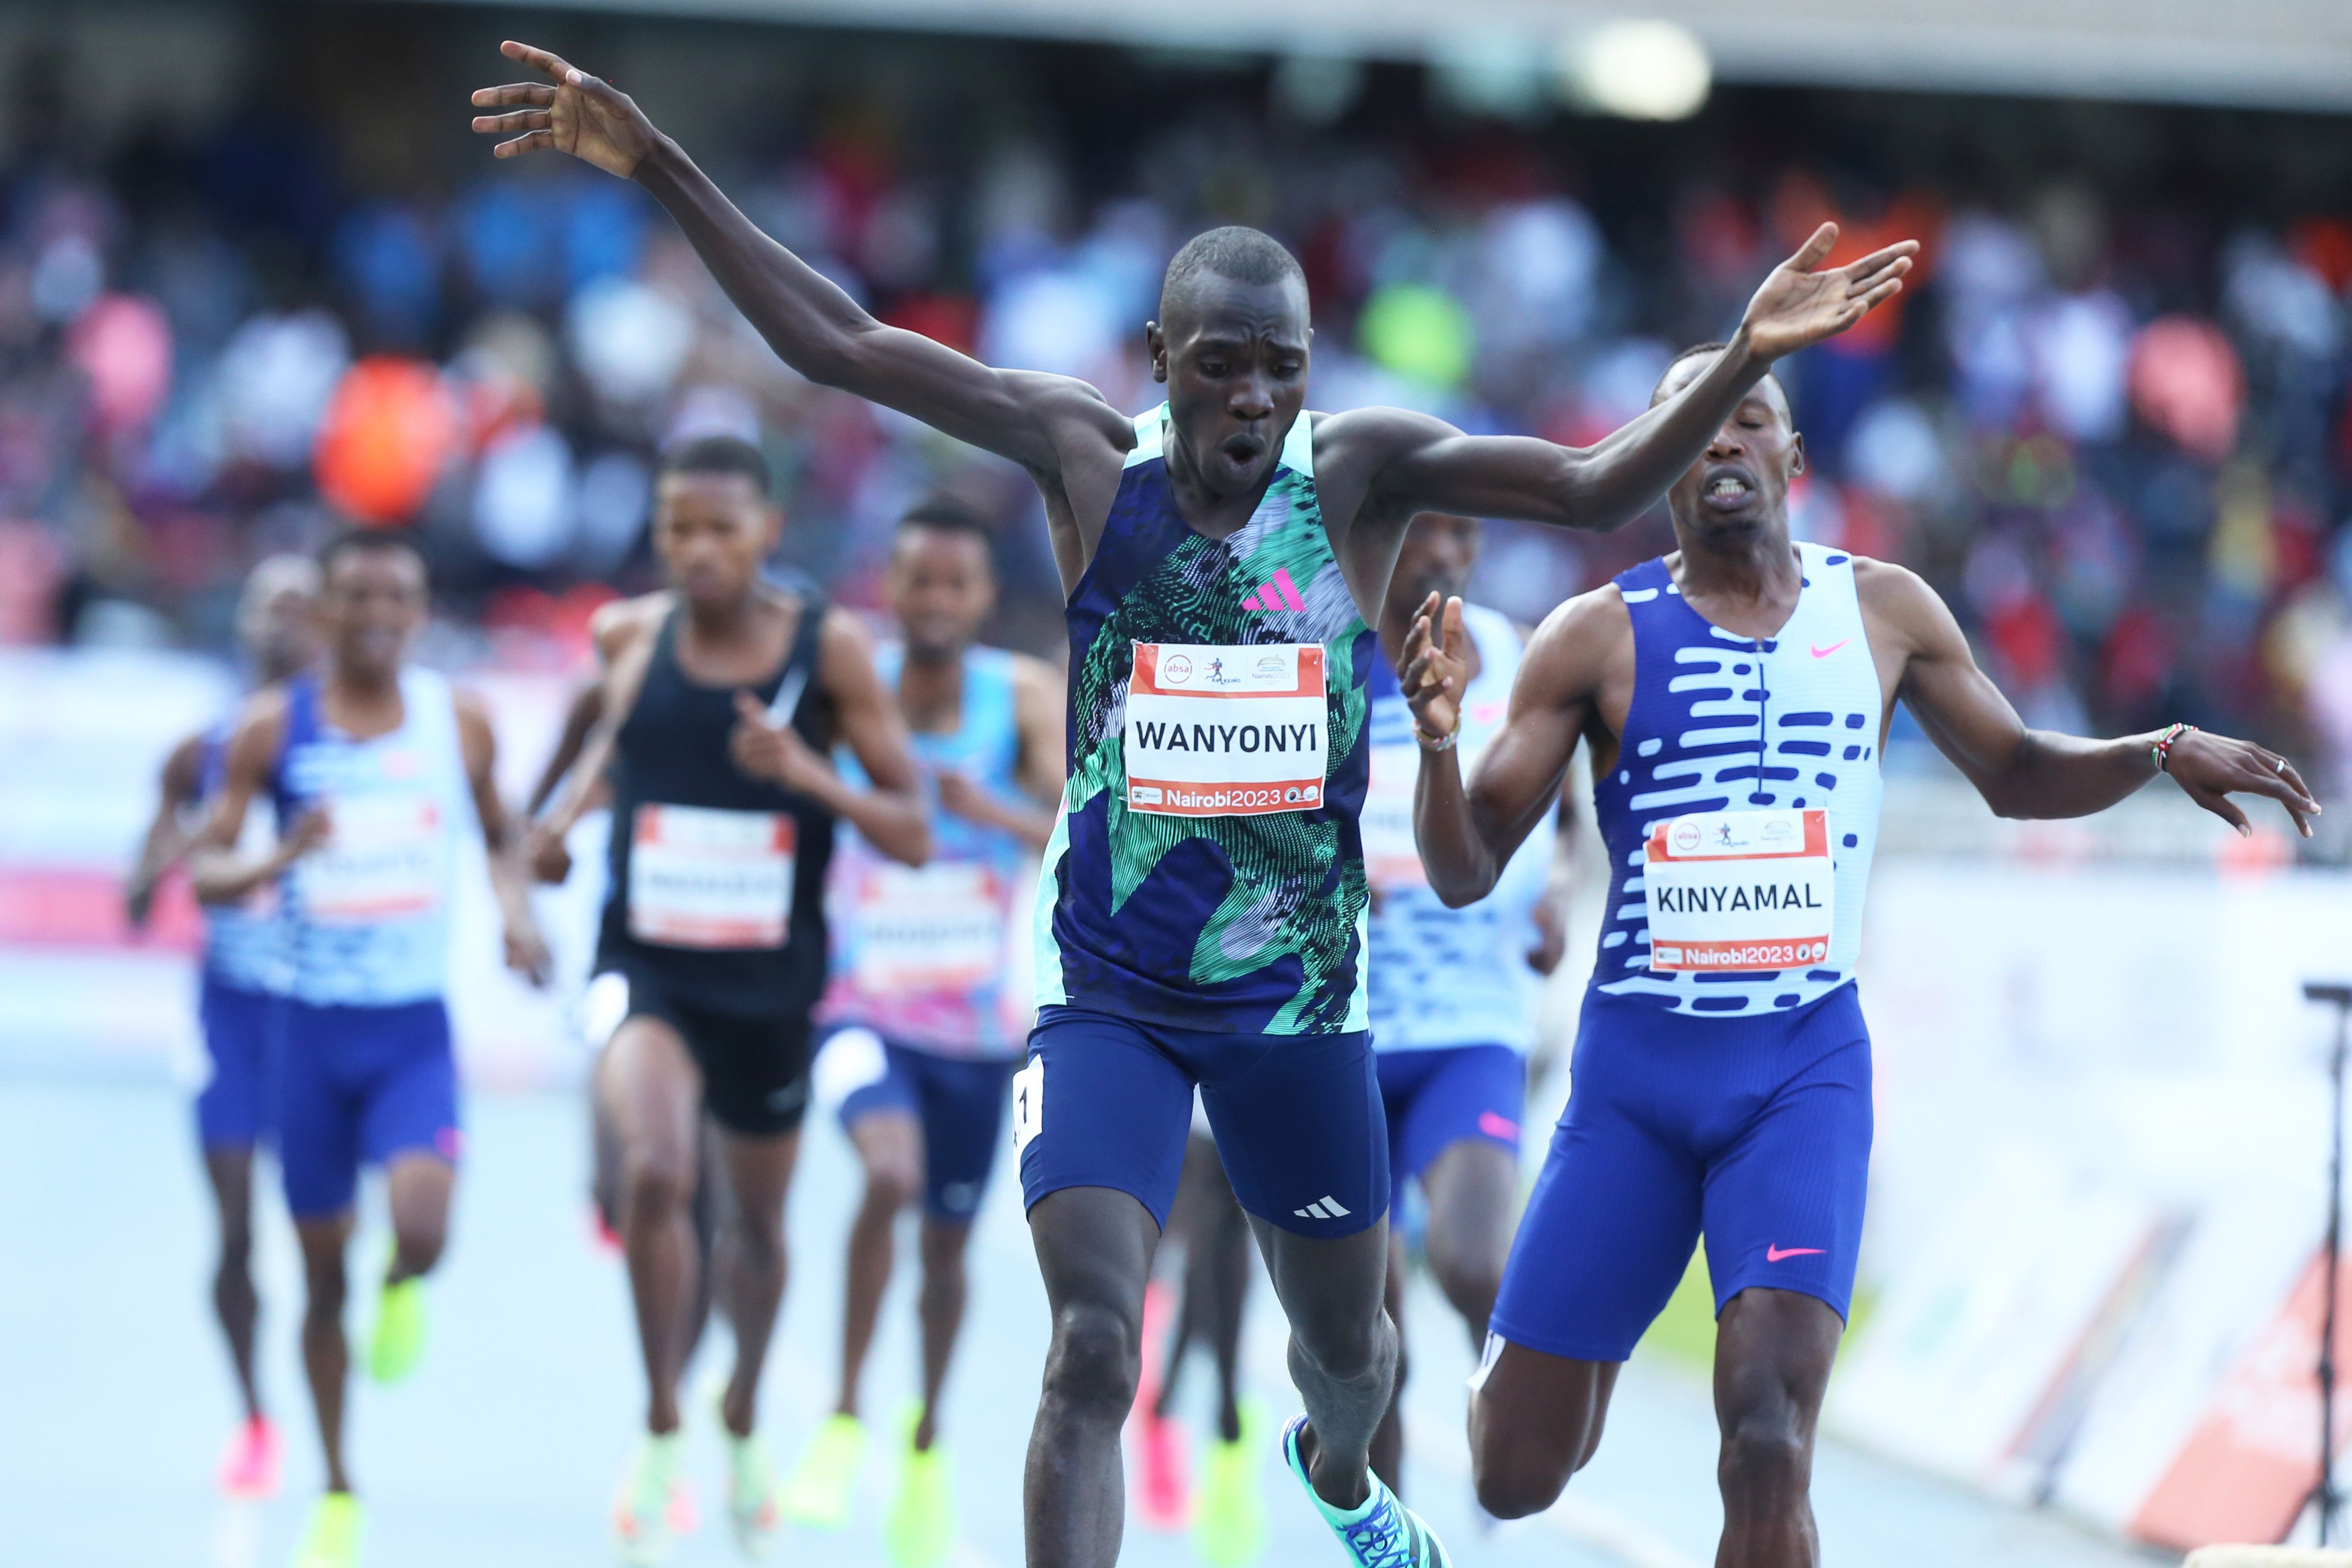 Emmanuel Wanyonyi wins the 800m at the Kip Keino Classic in Nairobi